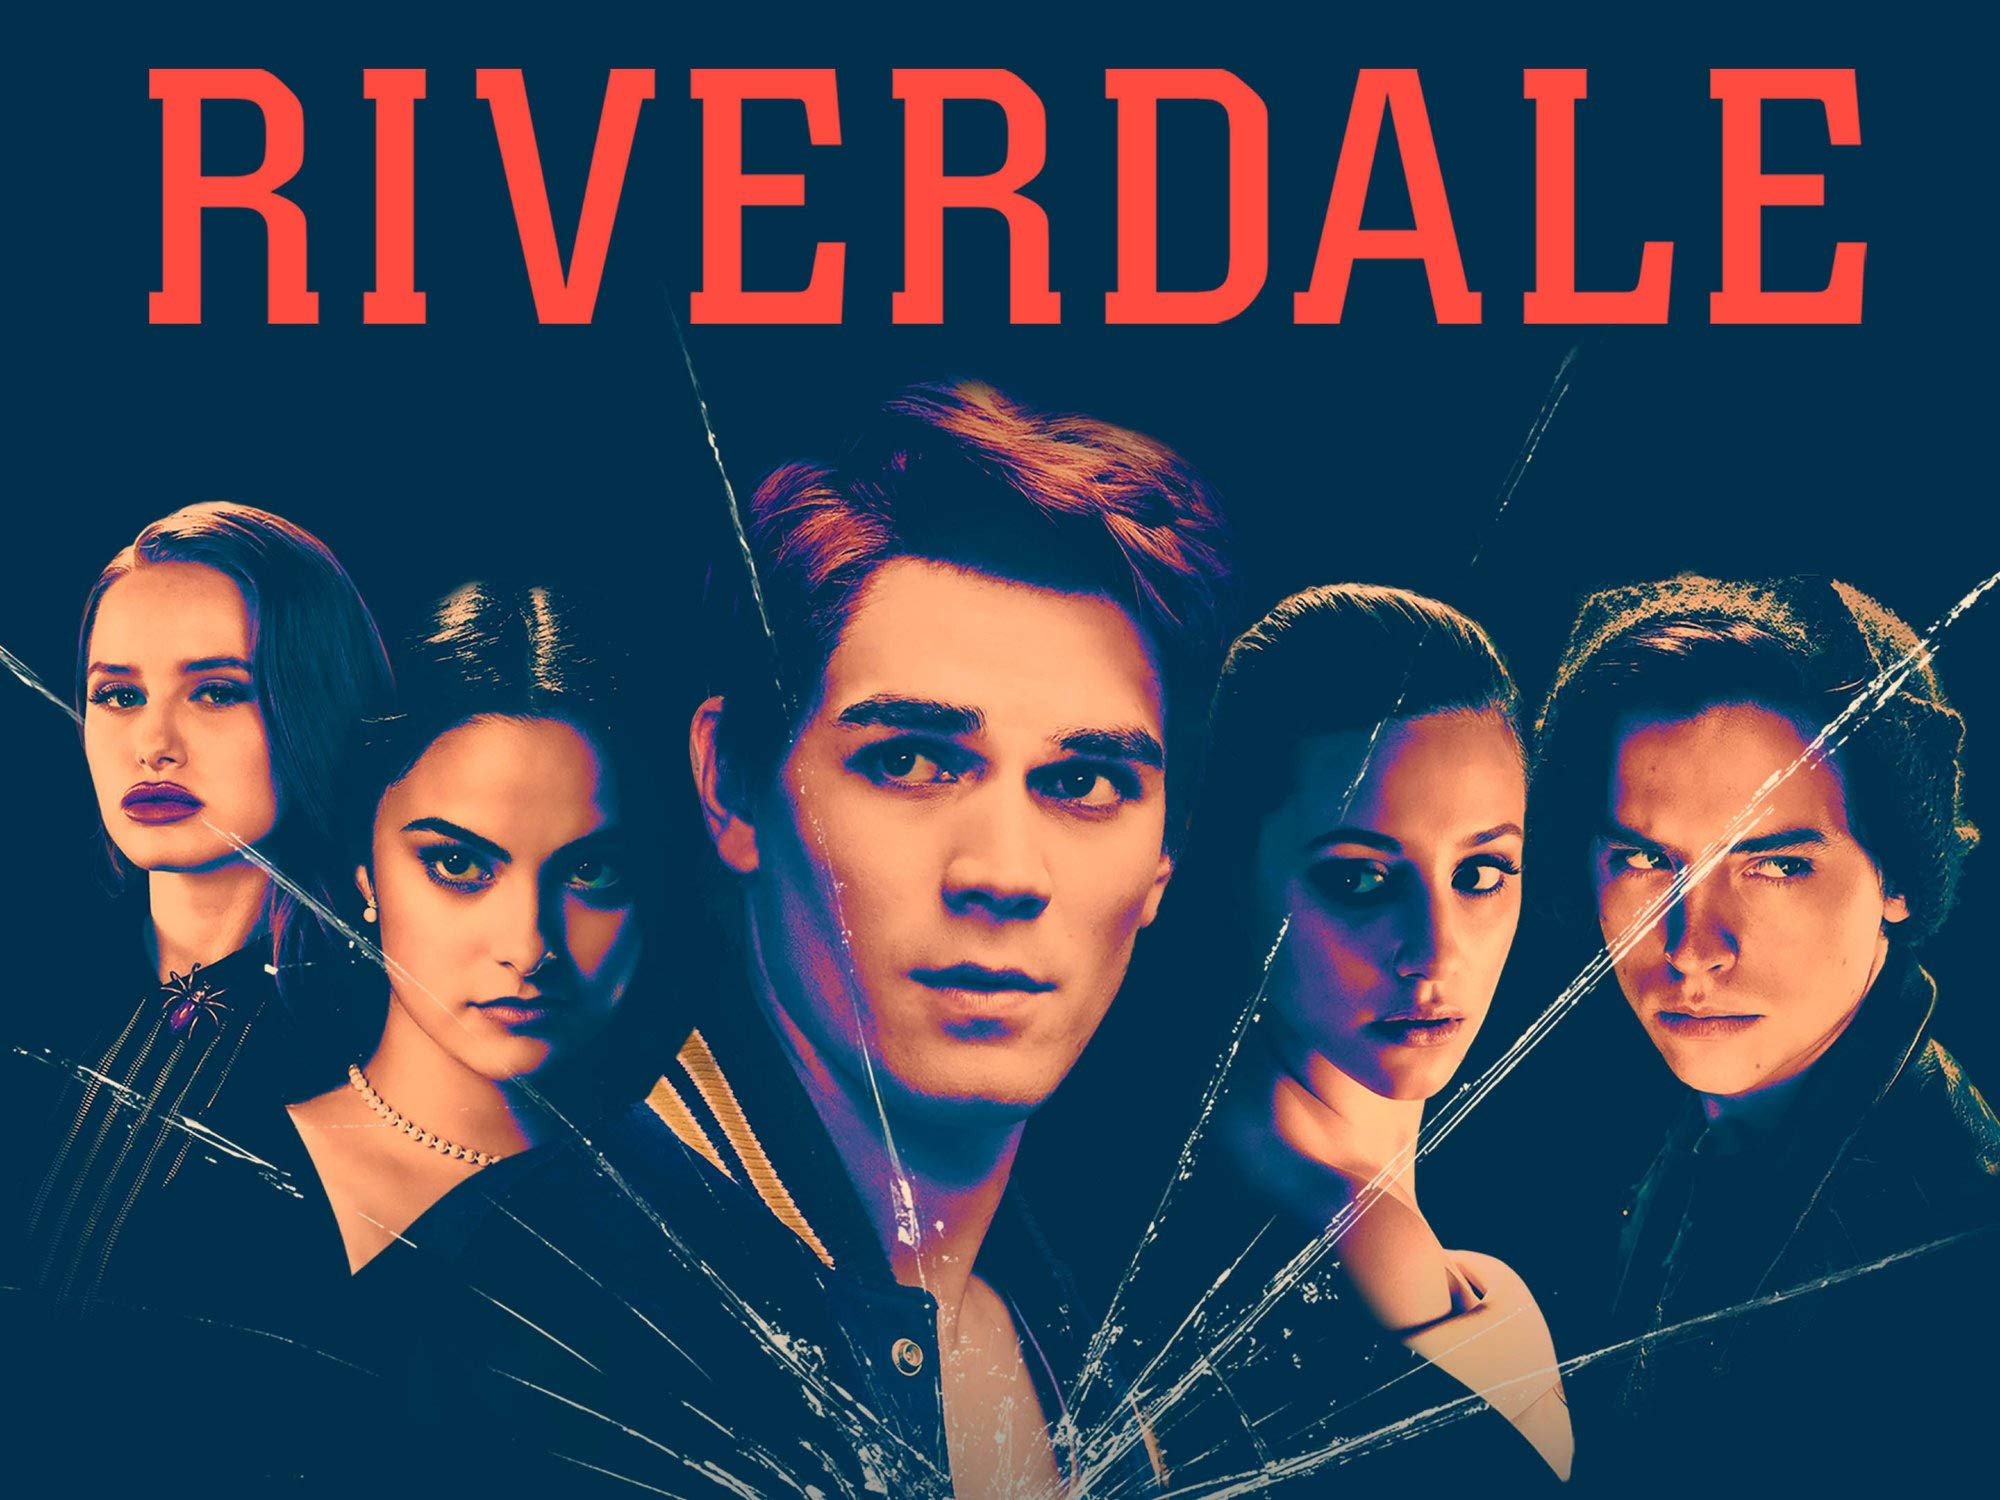 Riverdale Season 5: Release Date, Cast and Plot Details in Bermuda